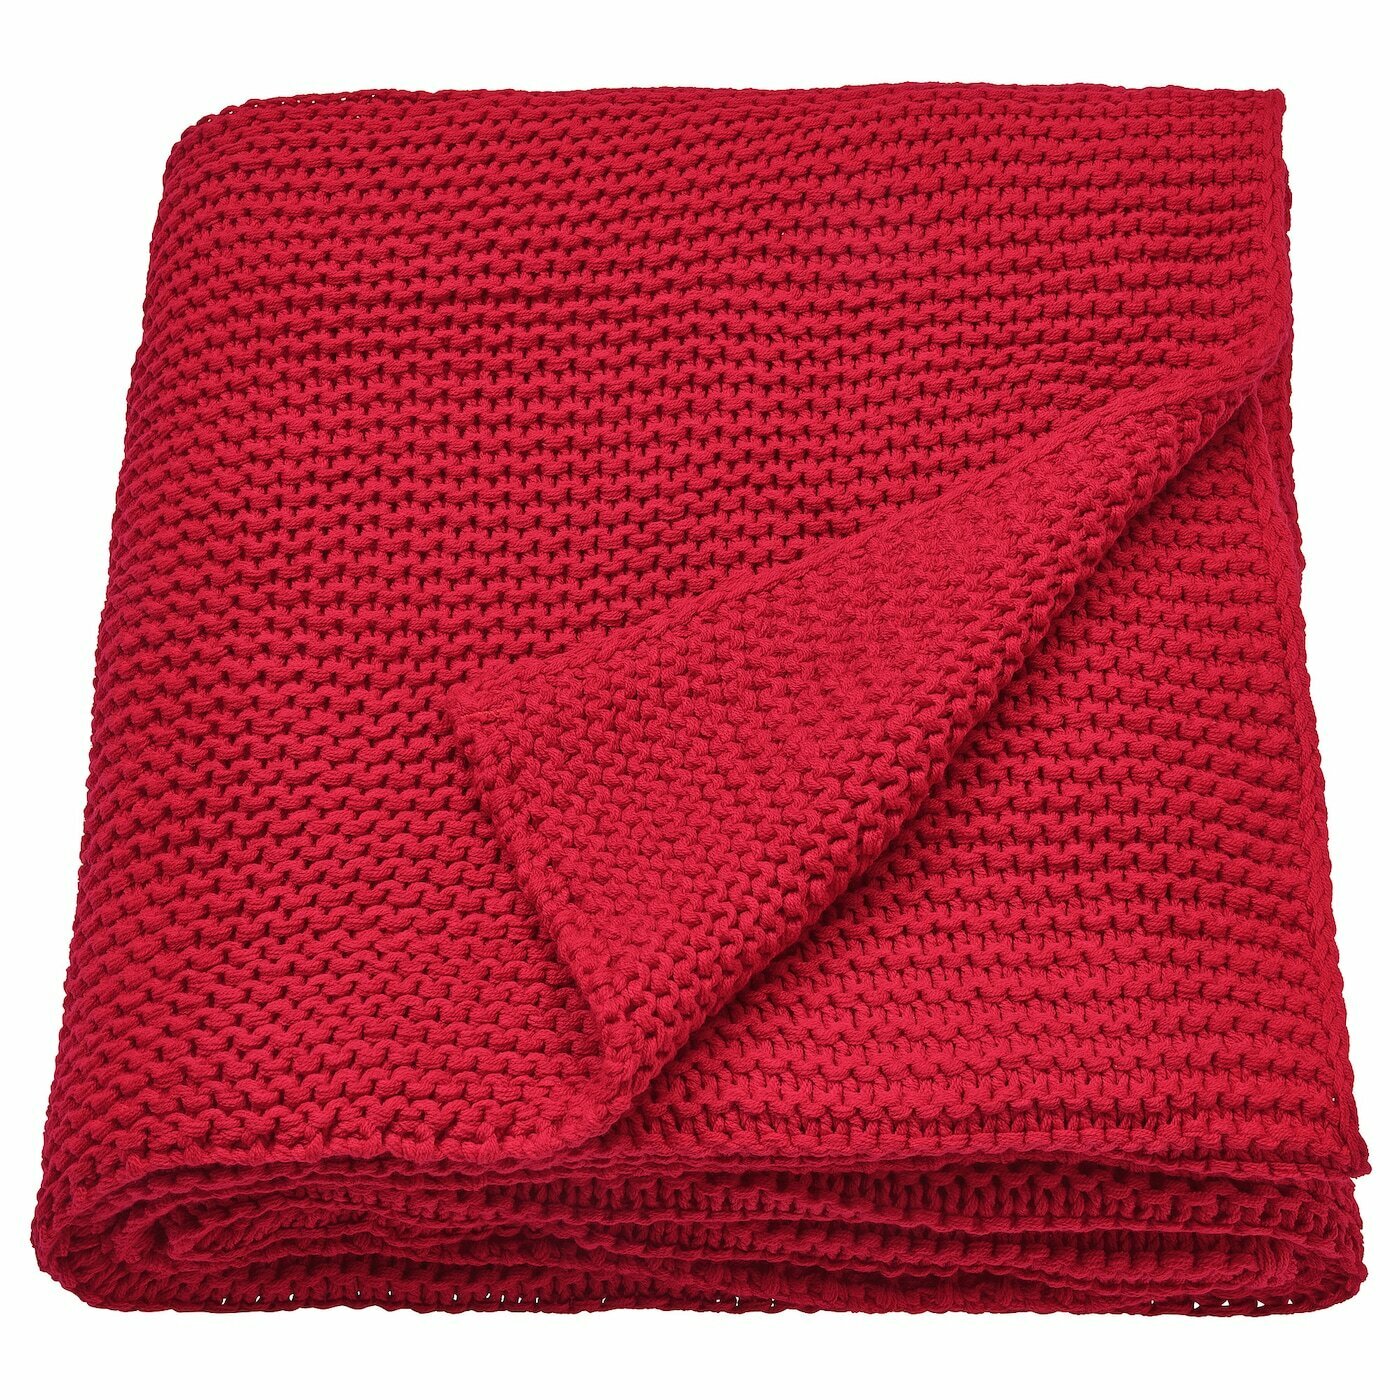 Плед икеа игабритта (IKEA NGABRITTA), 130x170 см, красный